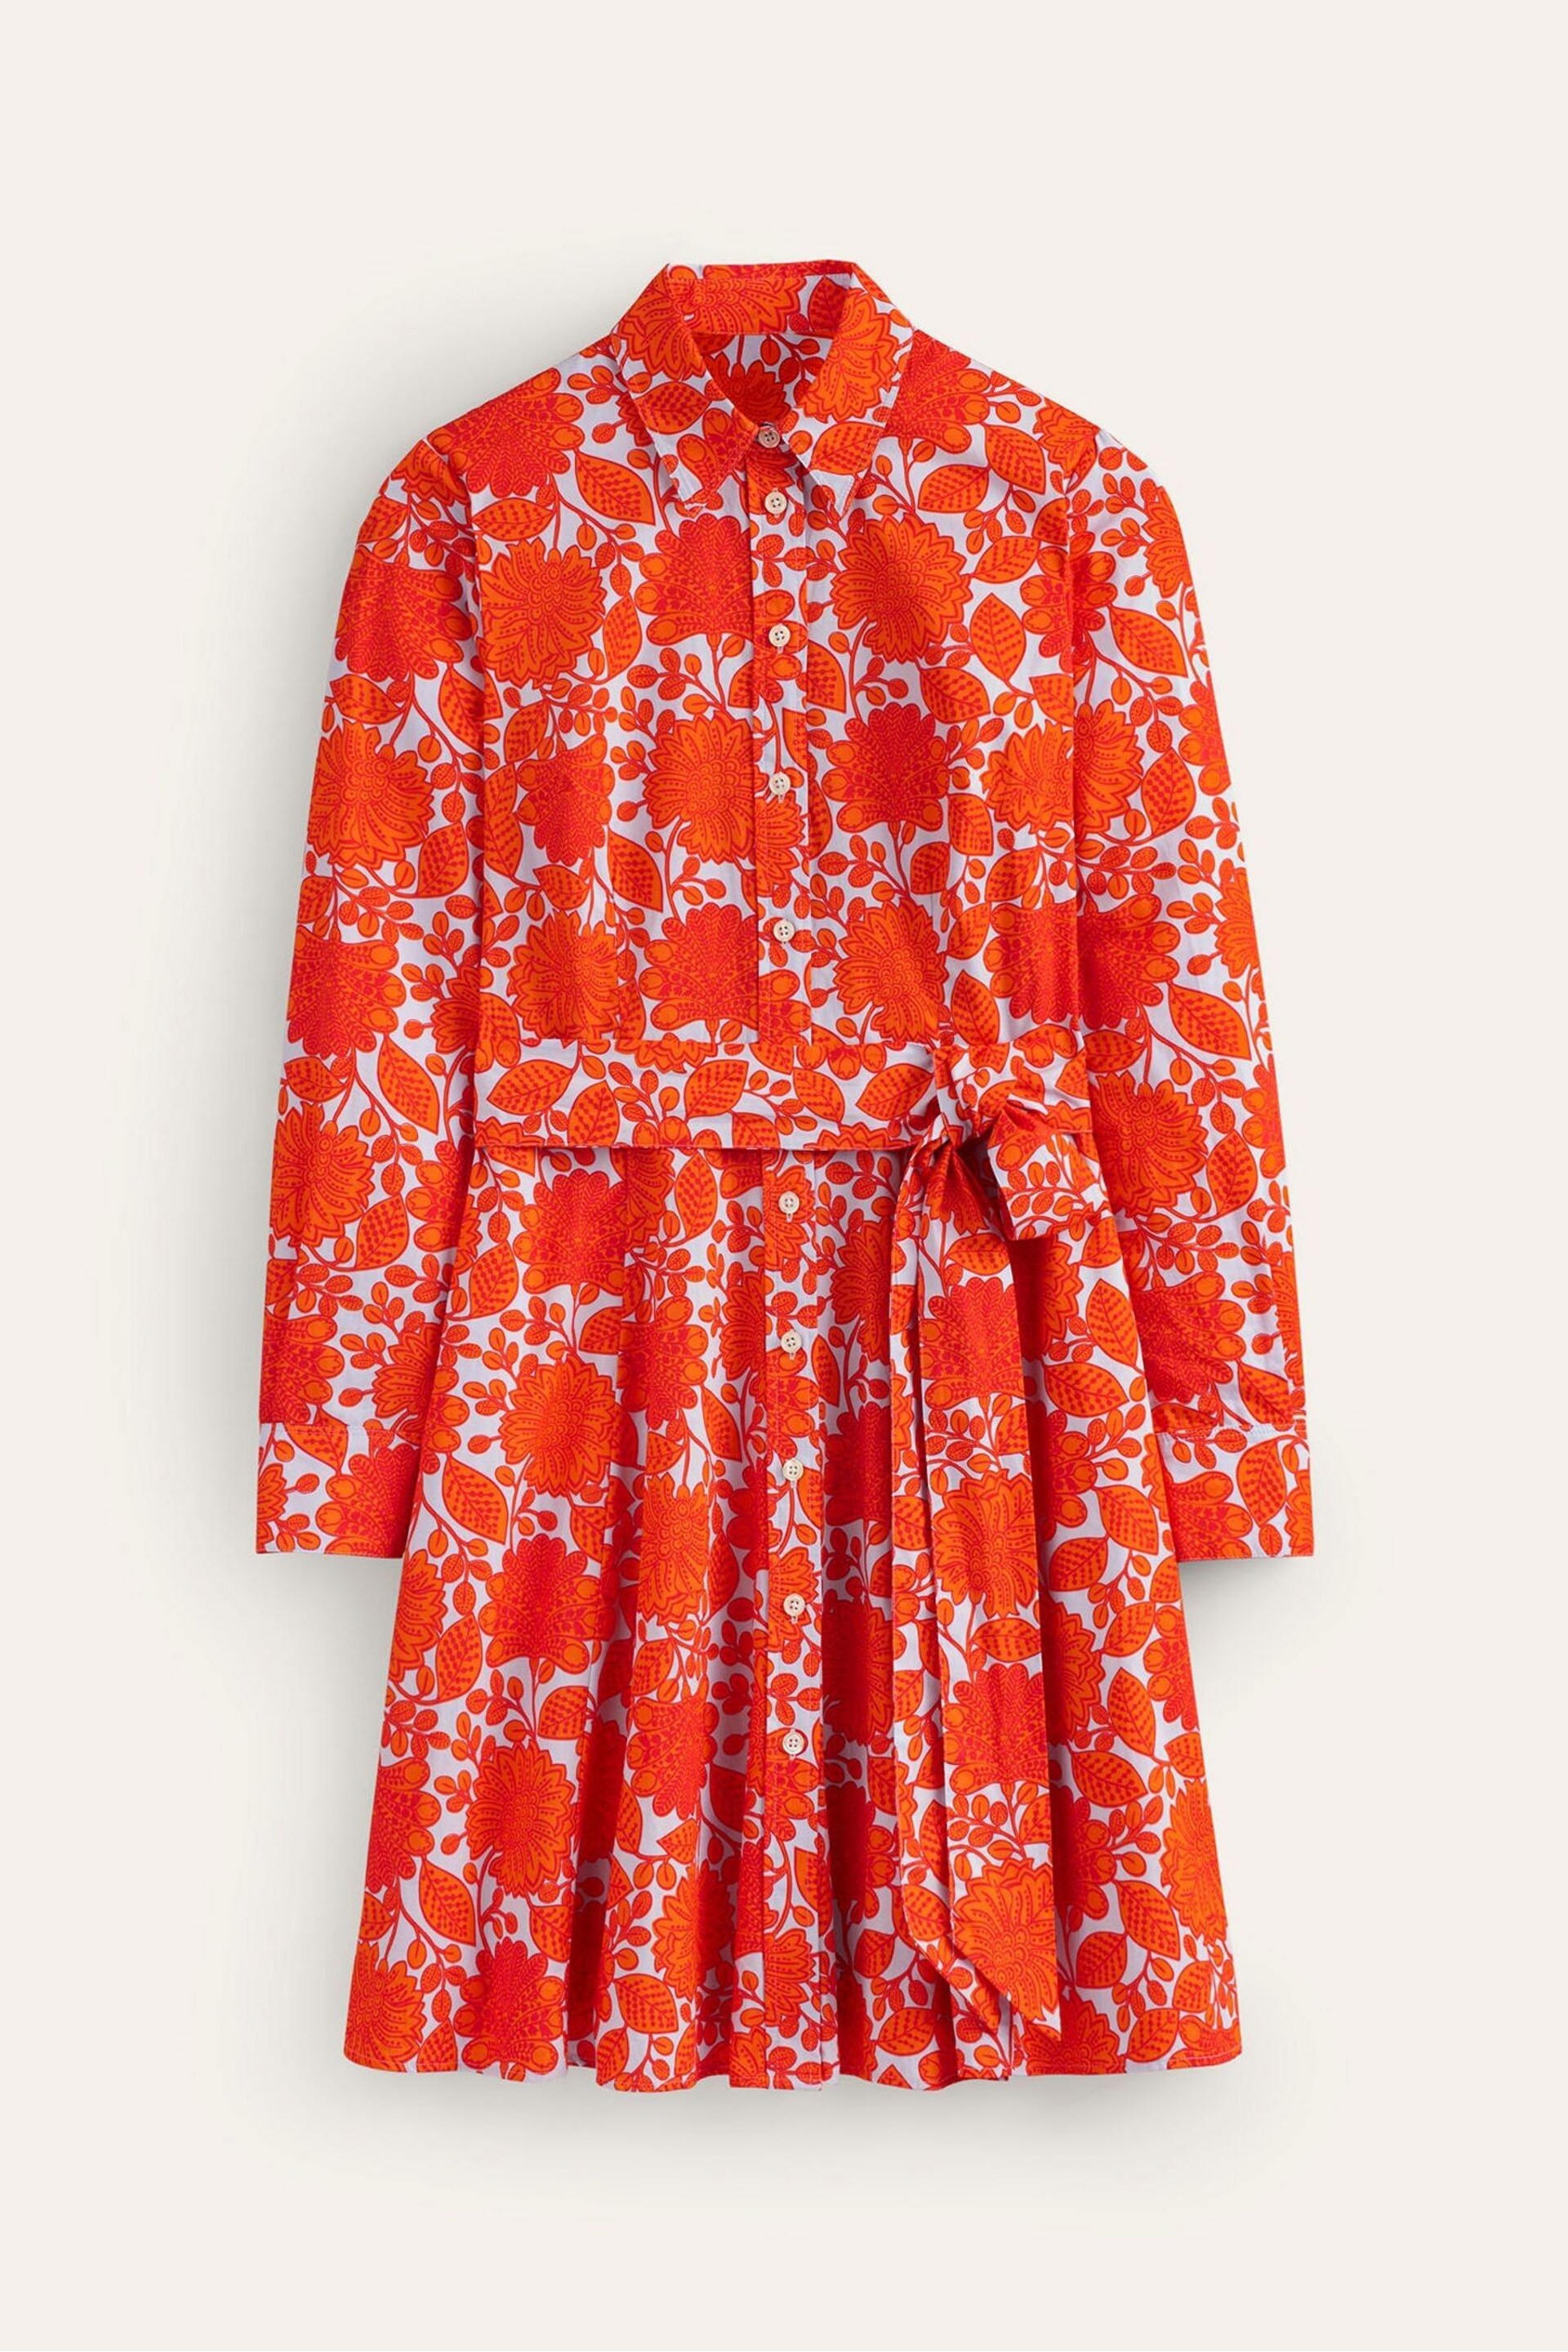 Boden Orange Amy Cotton Short Shirt Dress - Image 6 of 6